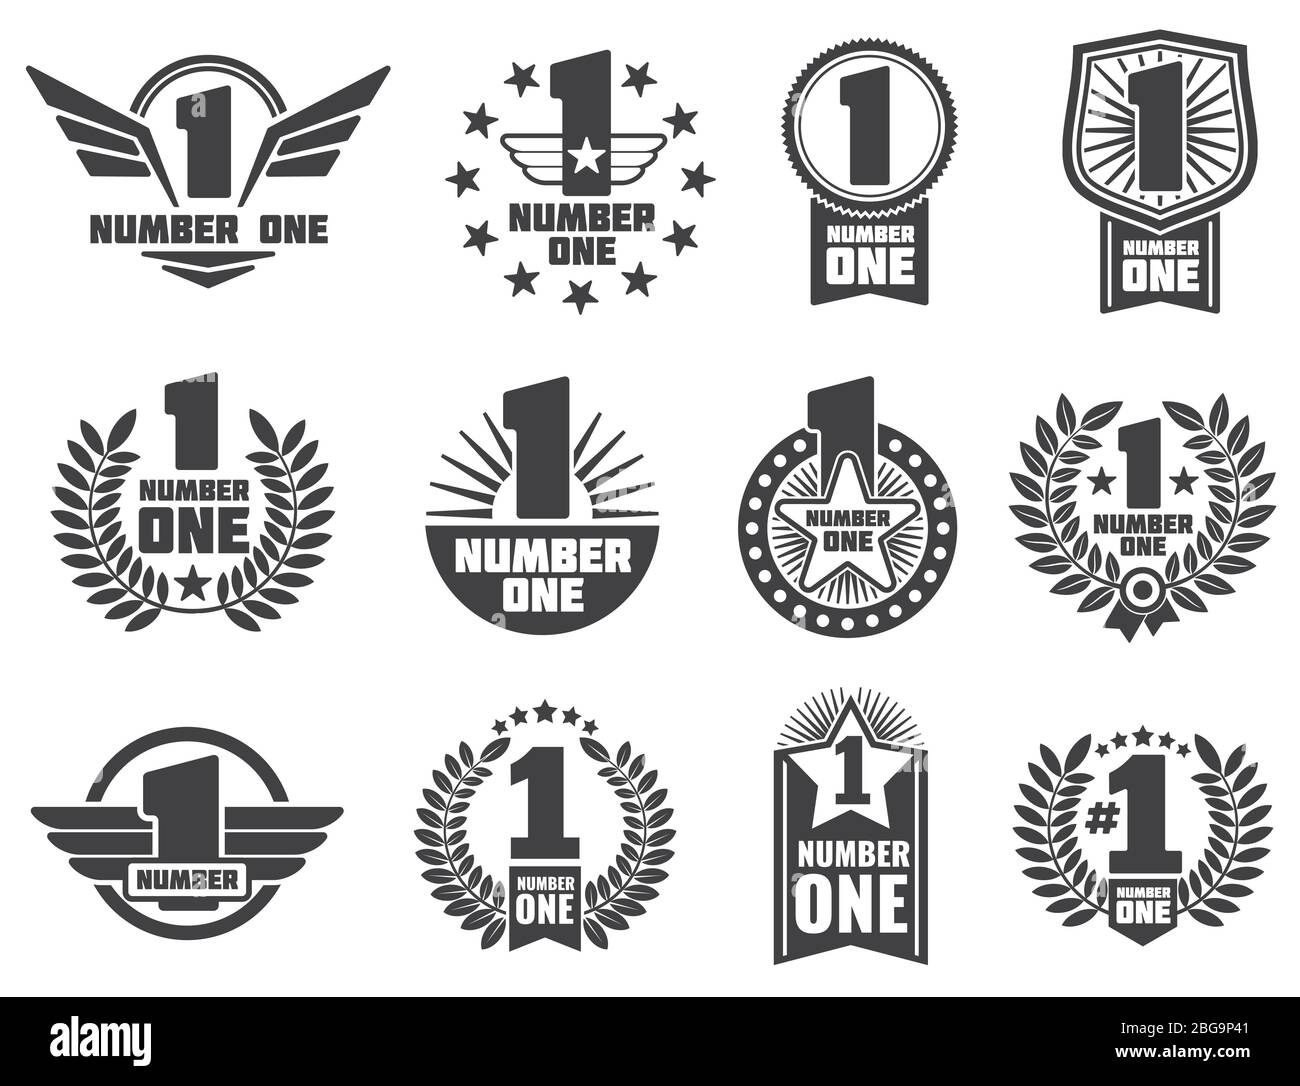 33 monochrome logos that are the new black  Branding design logo, Logo  inspiration, Black and white logos